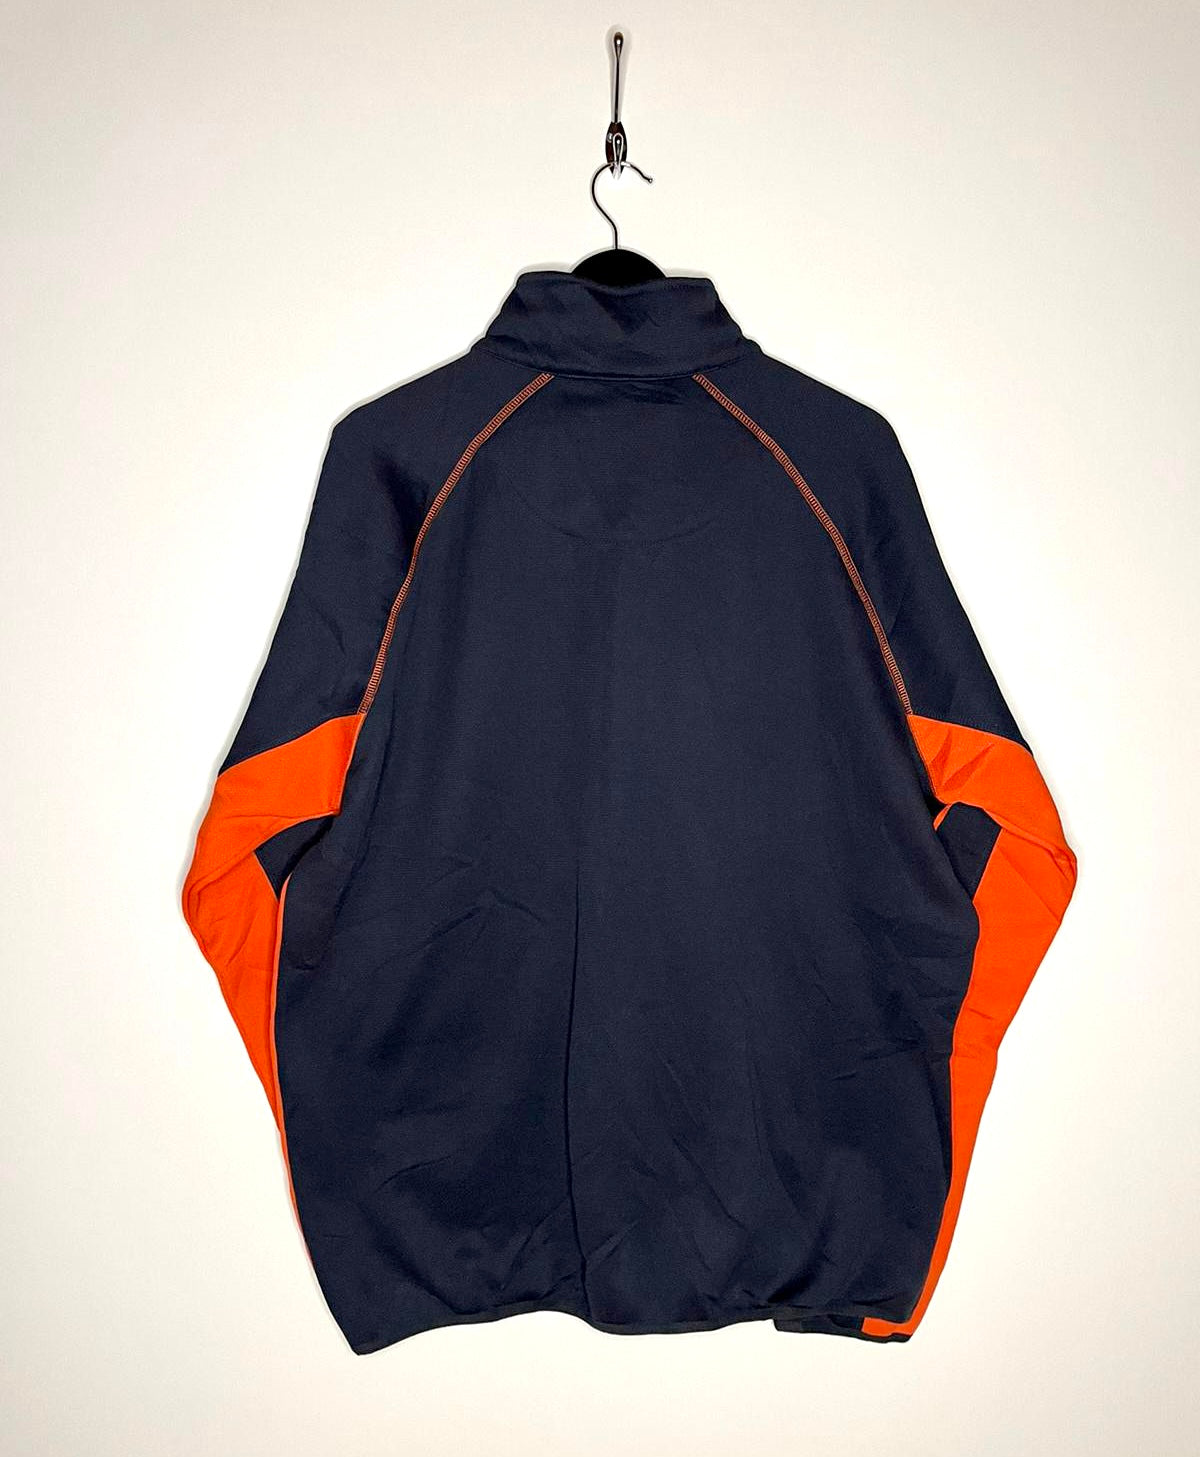 NFL Chicago Bears track jacket size XL 